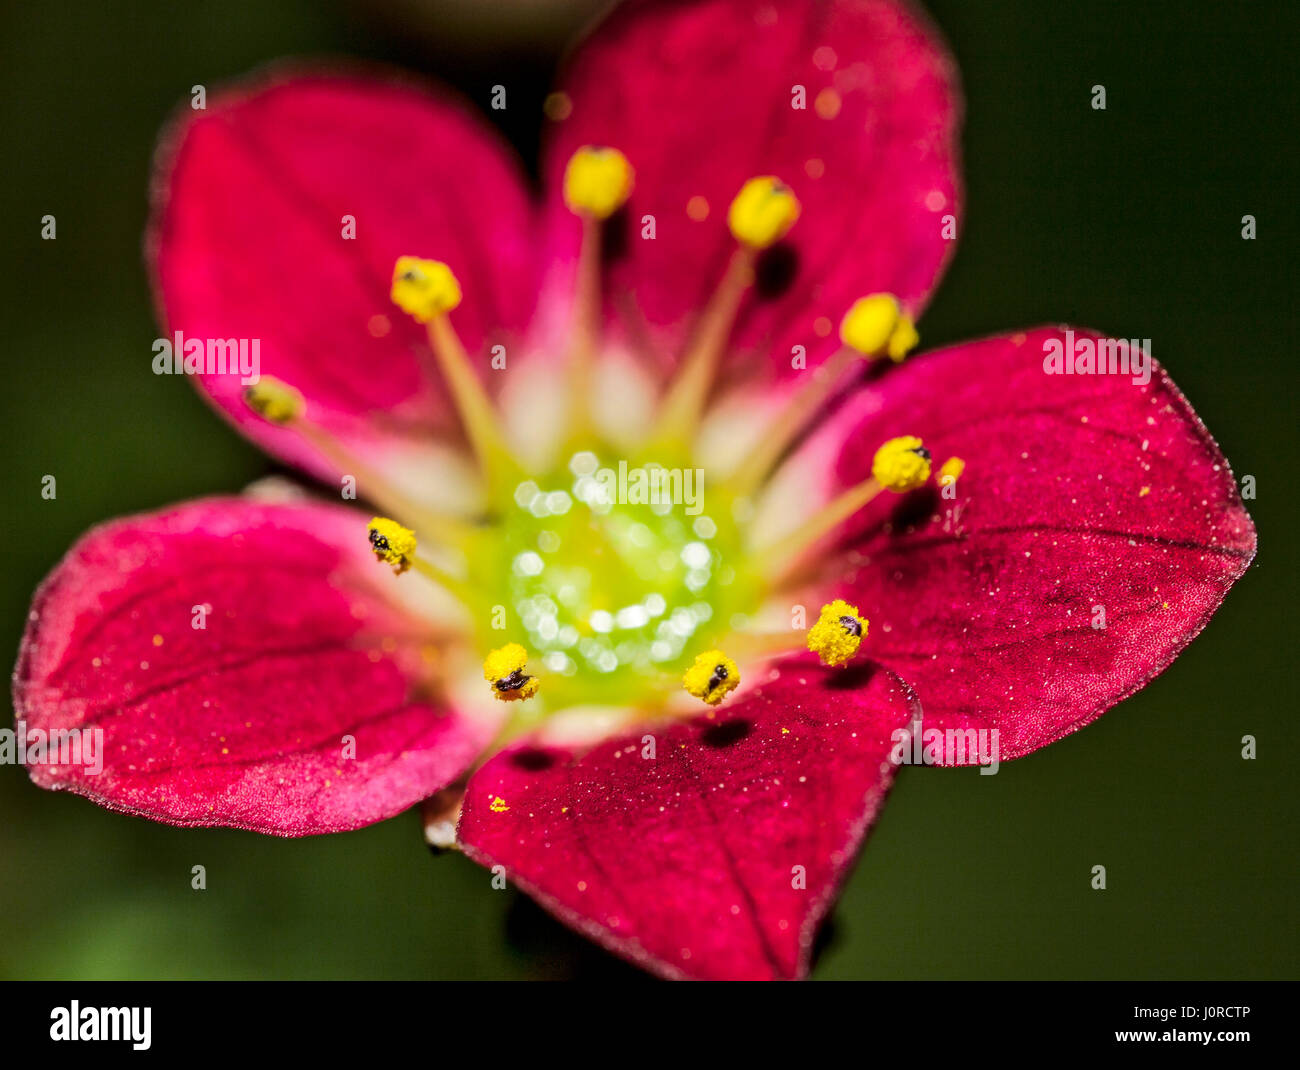 Saxifrage flower. Stock Photo